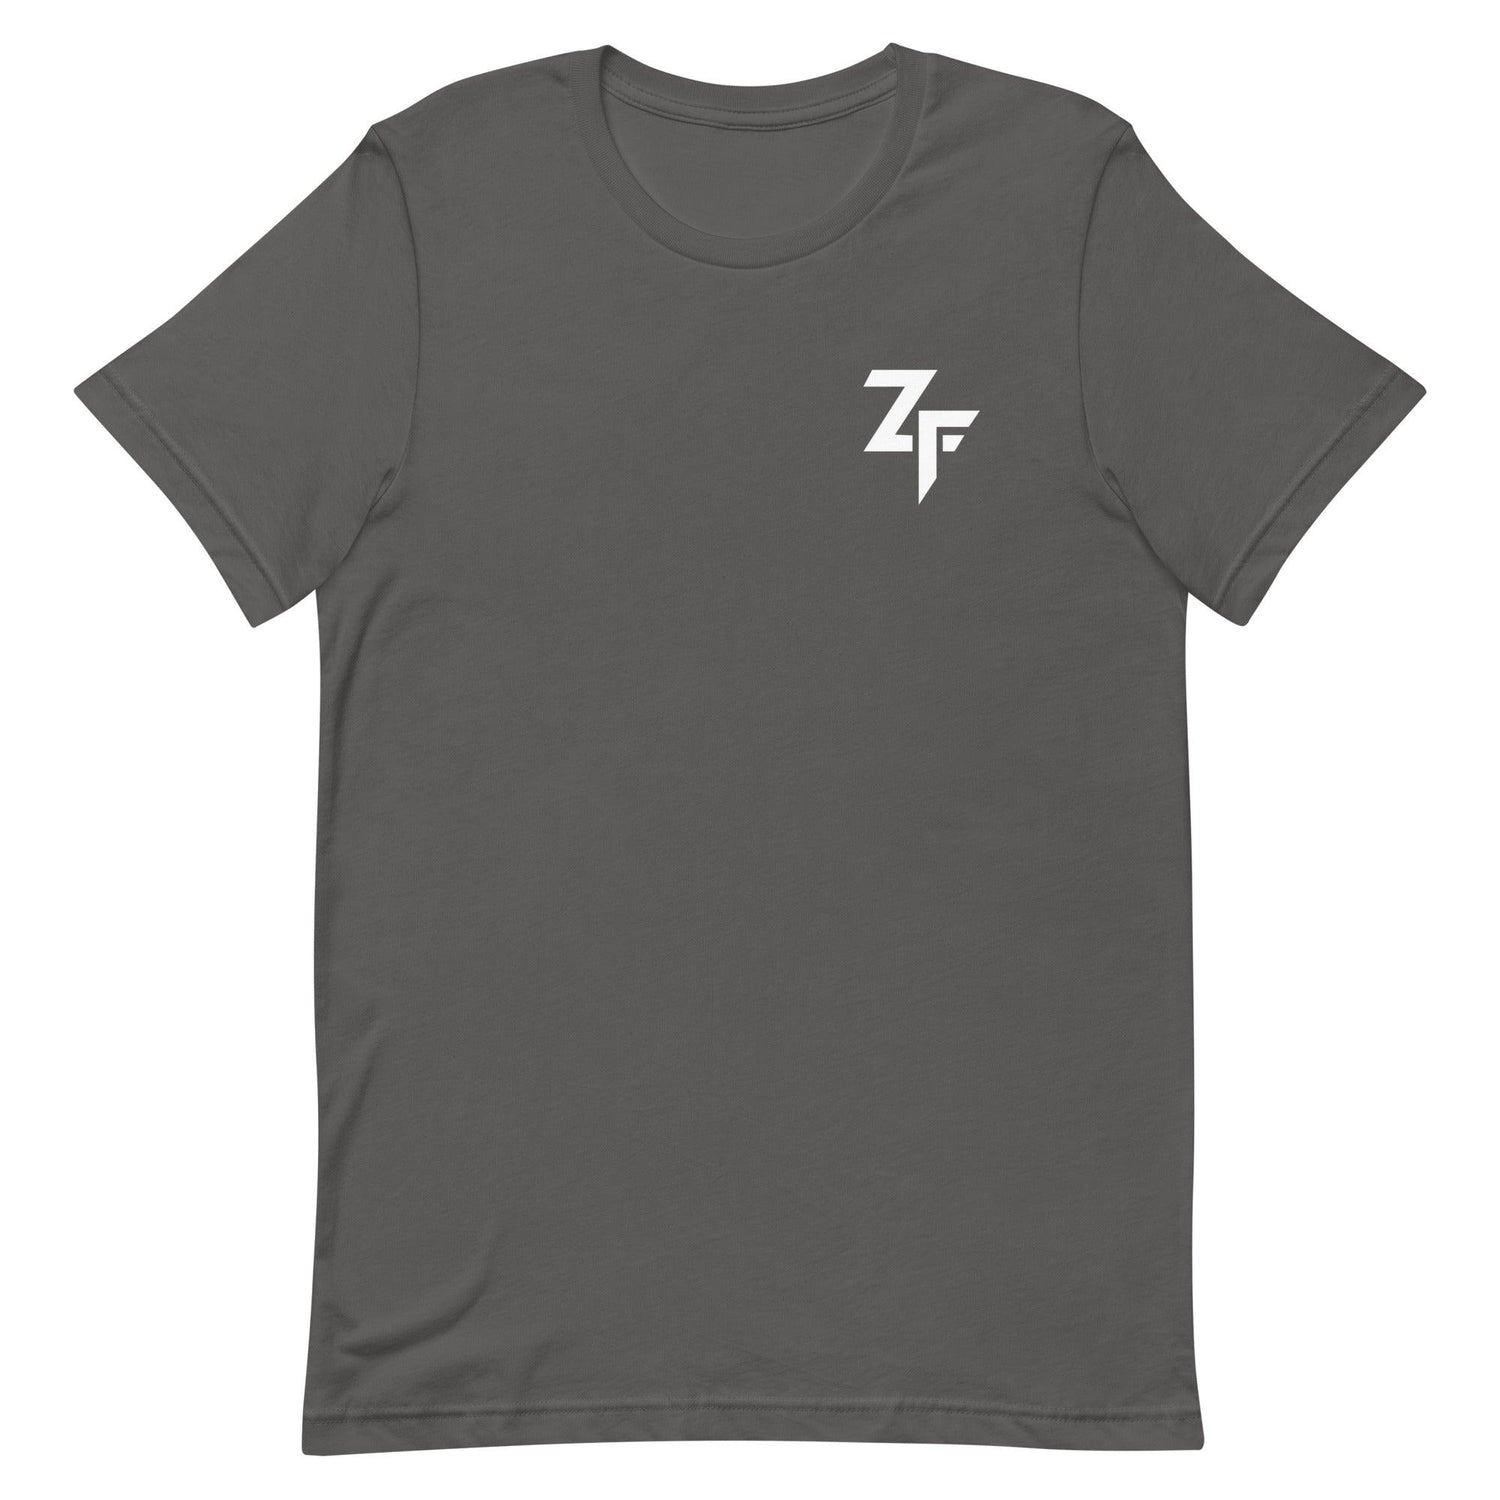 Zakhari Franklin "ZF" t-shirt - Fan Arch